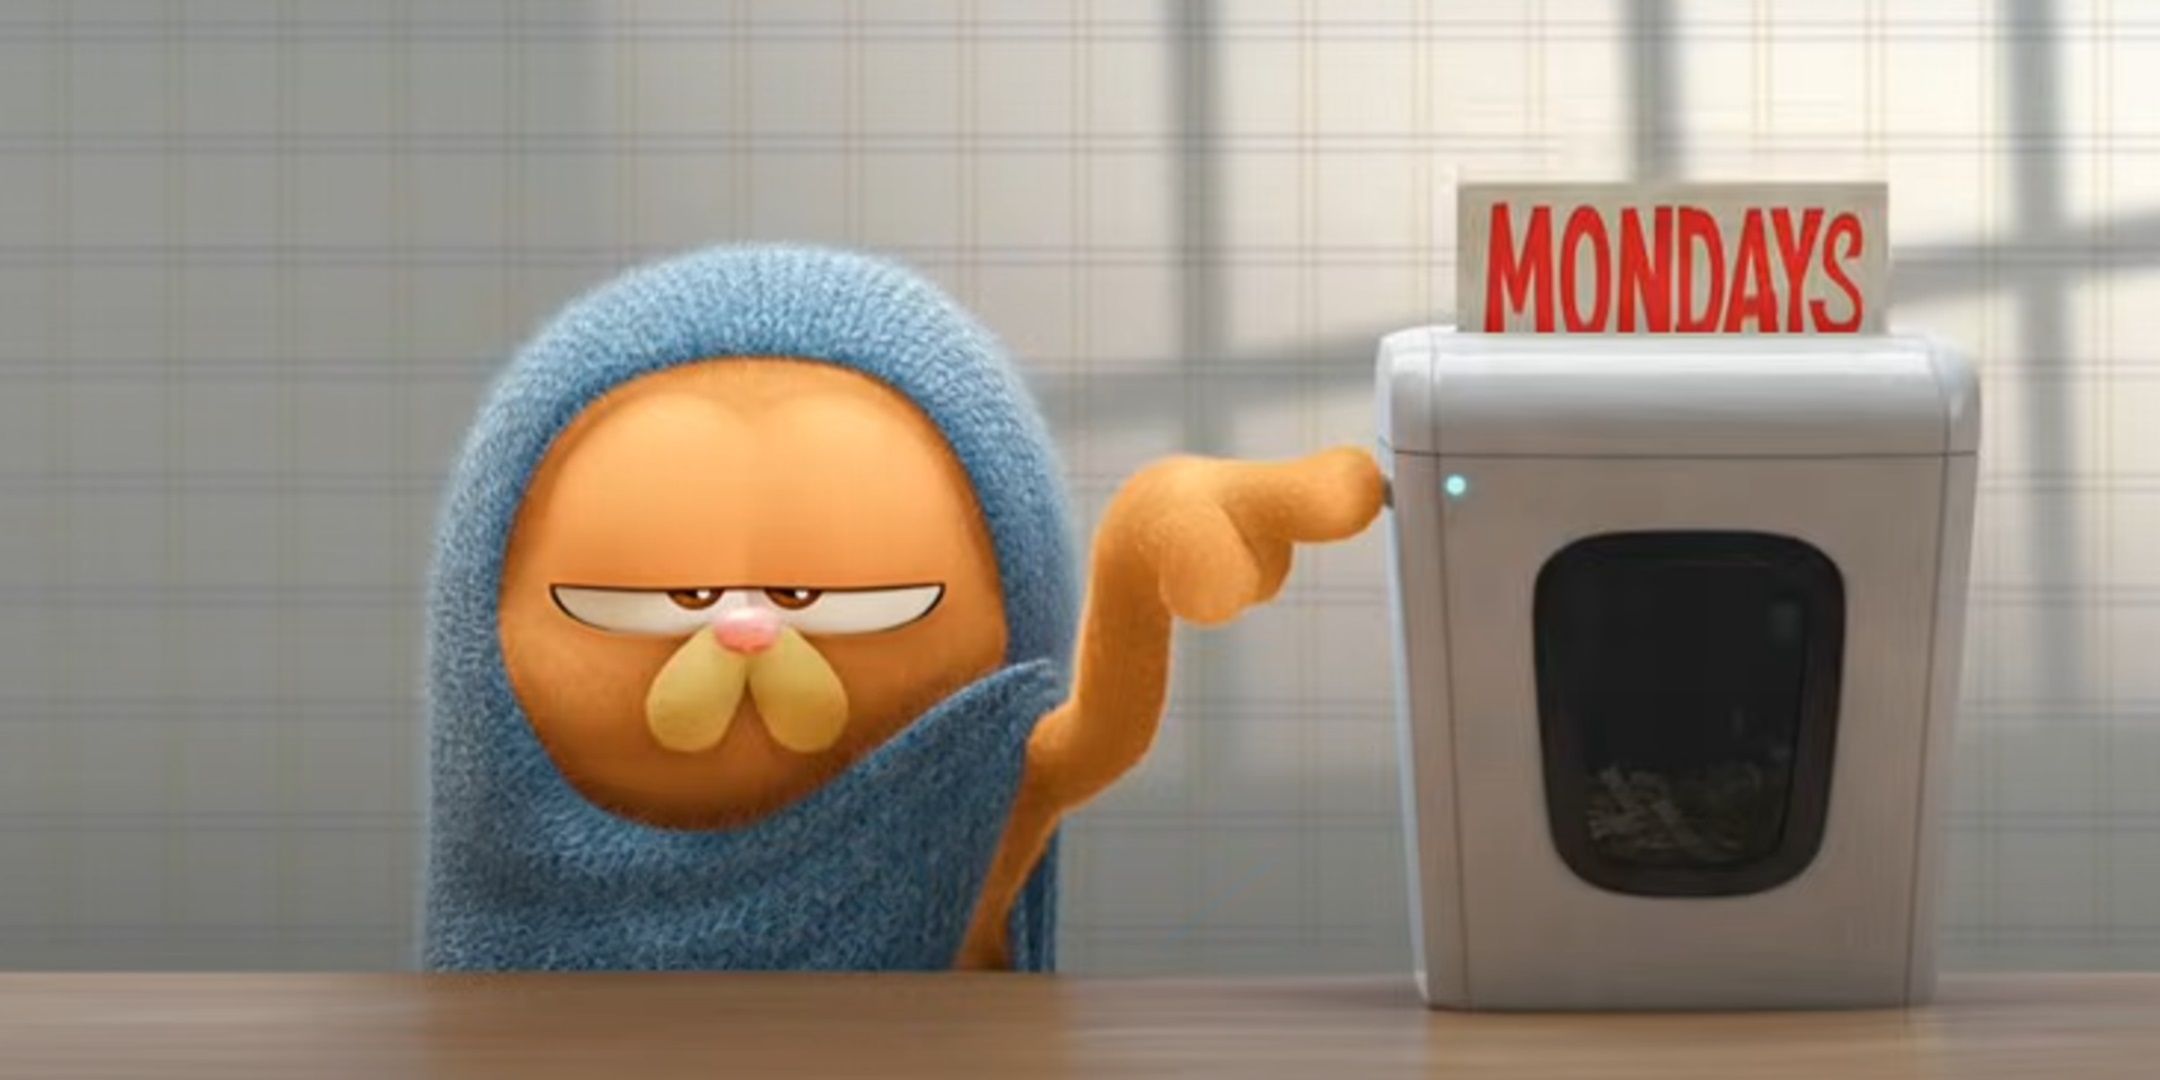 Garfield shredding Mondays